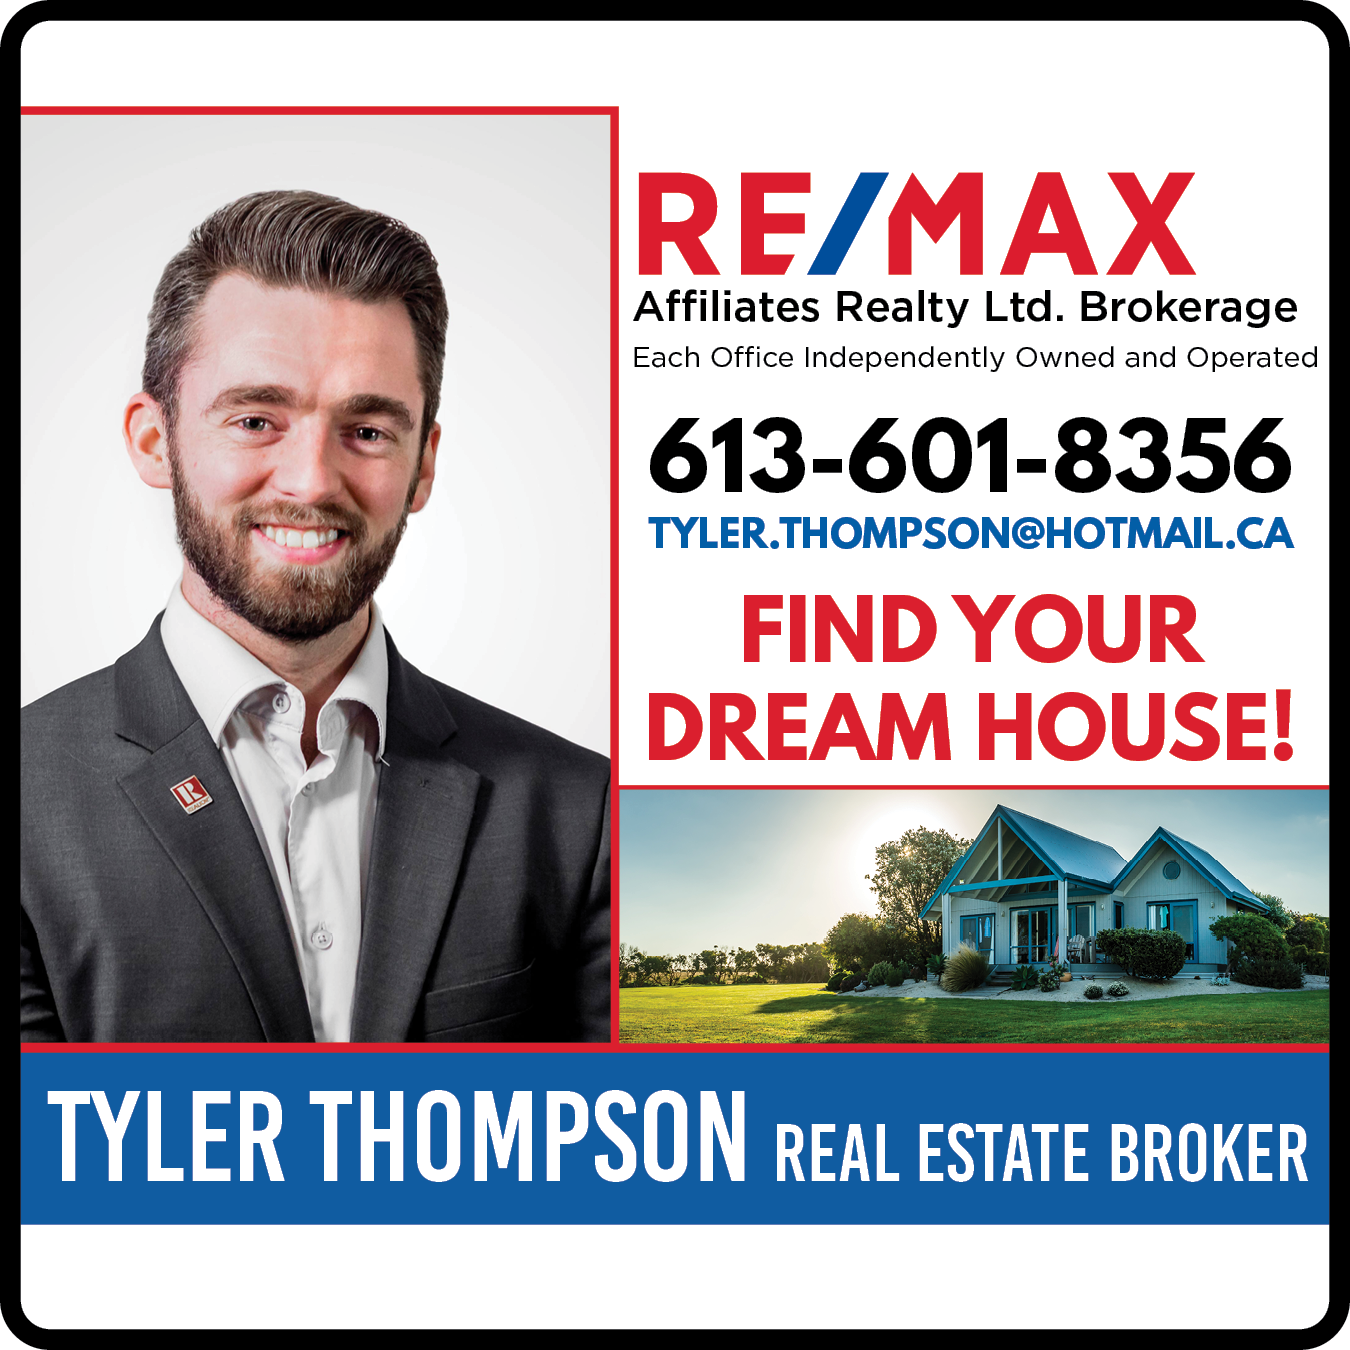 Tyler Thompson, Remax Affiliates Realty Ltd